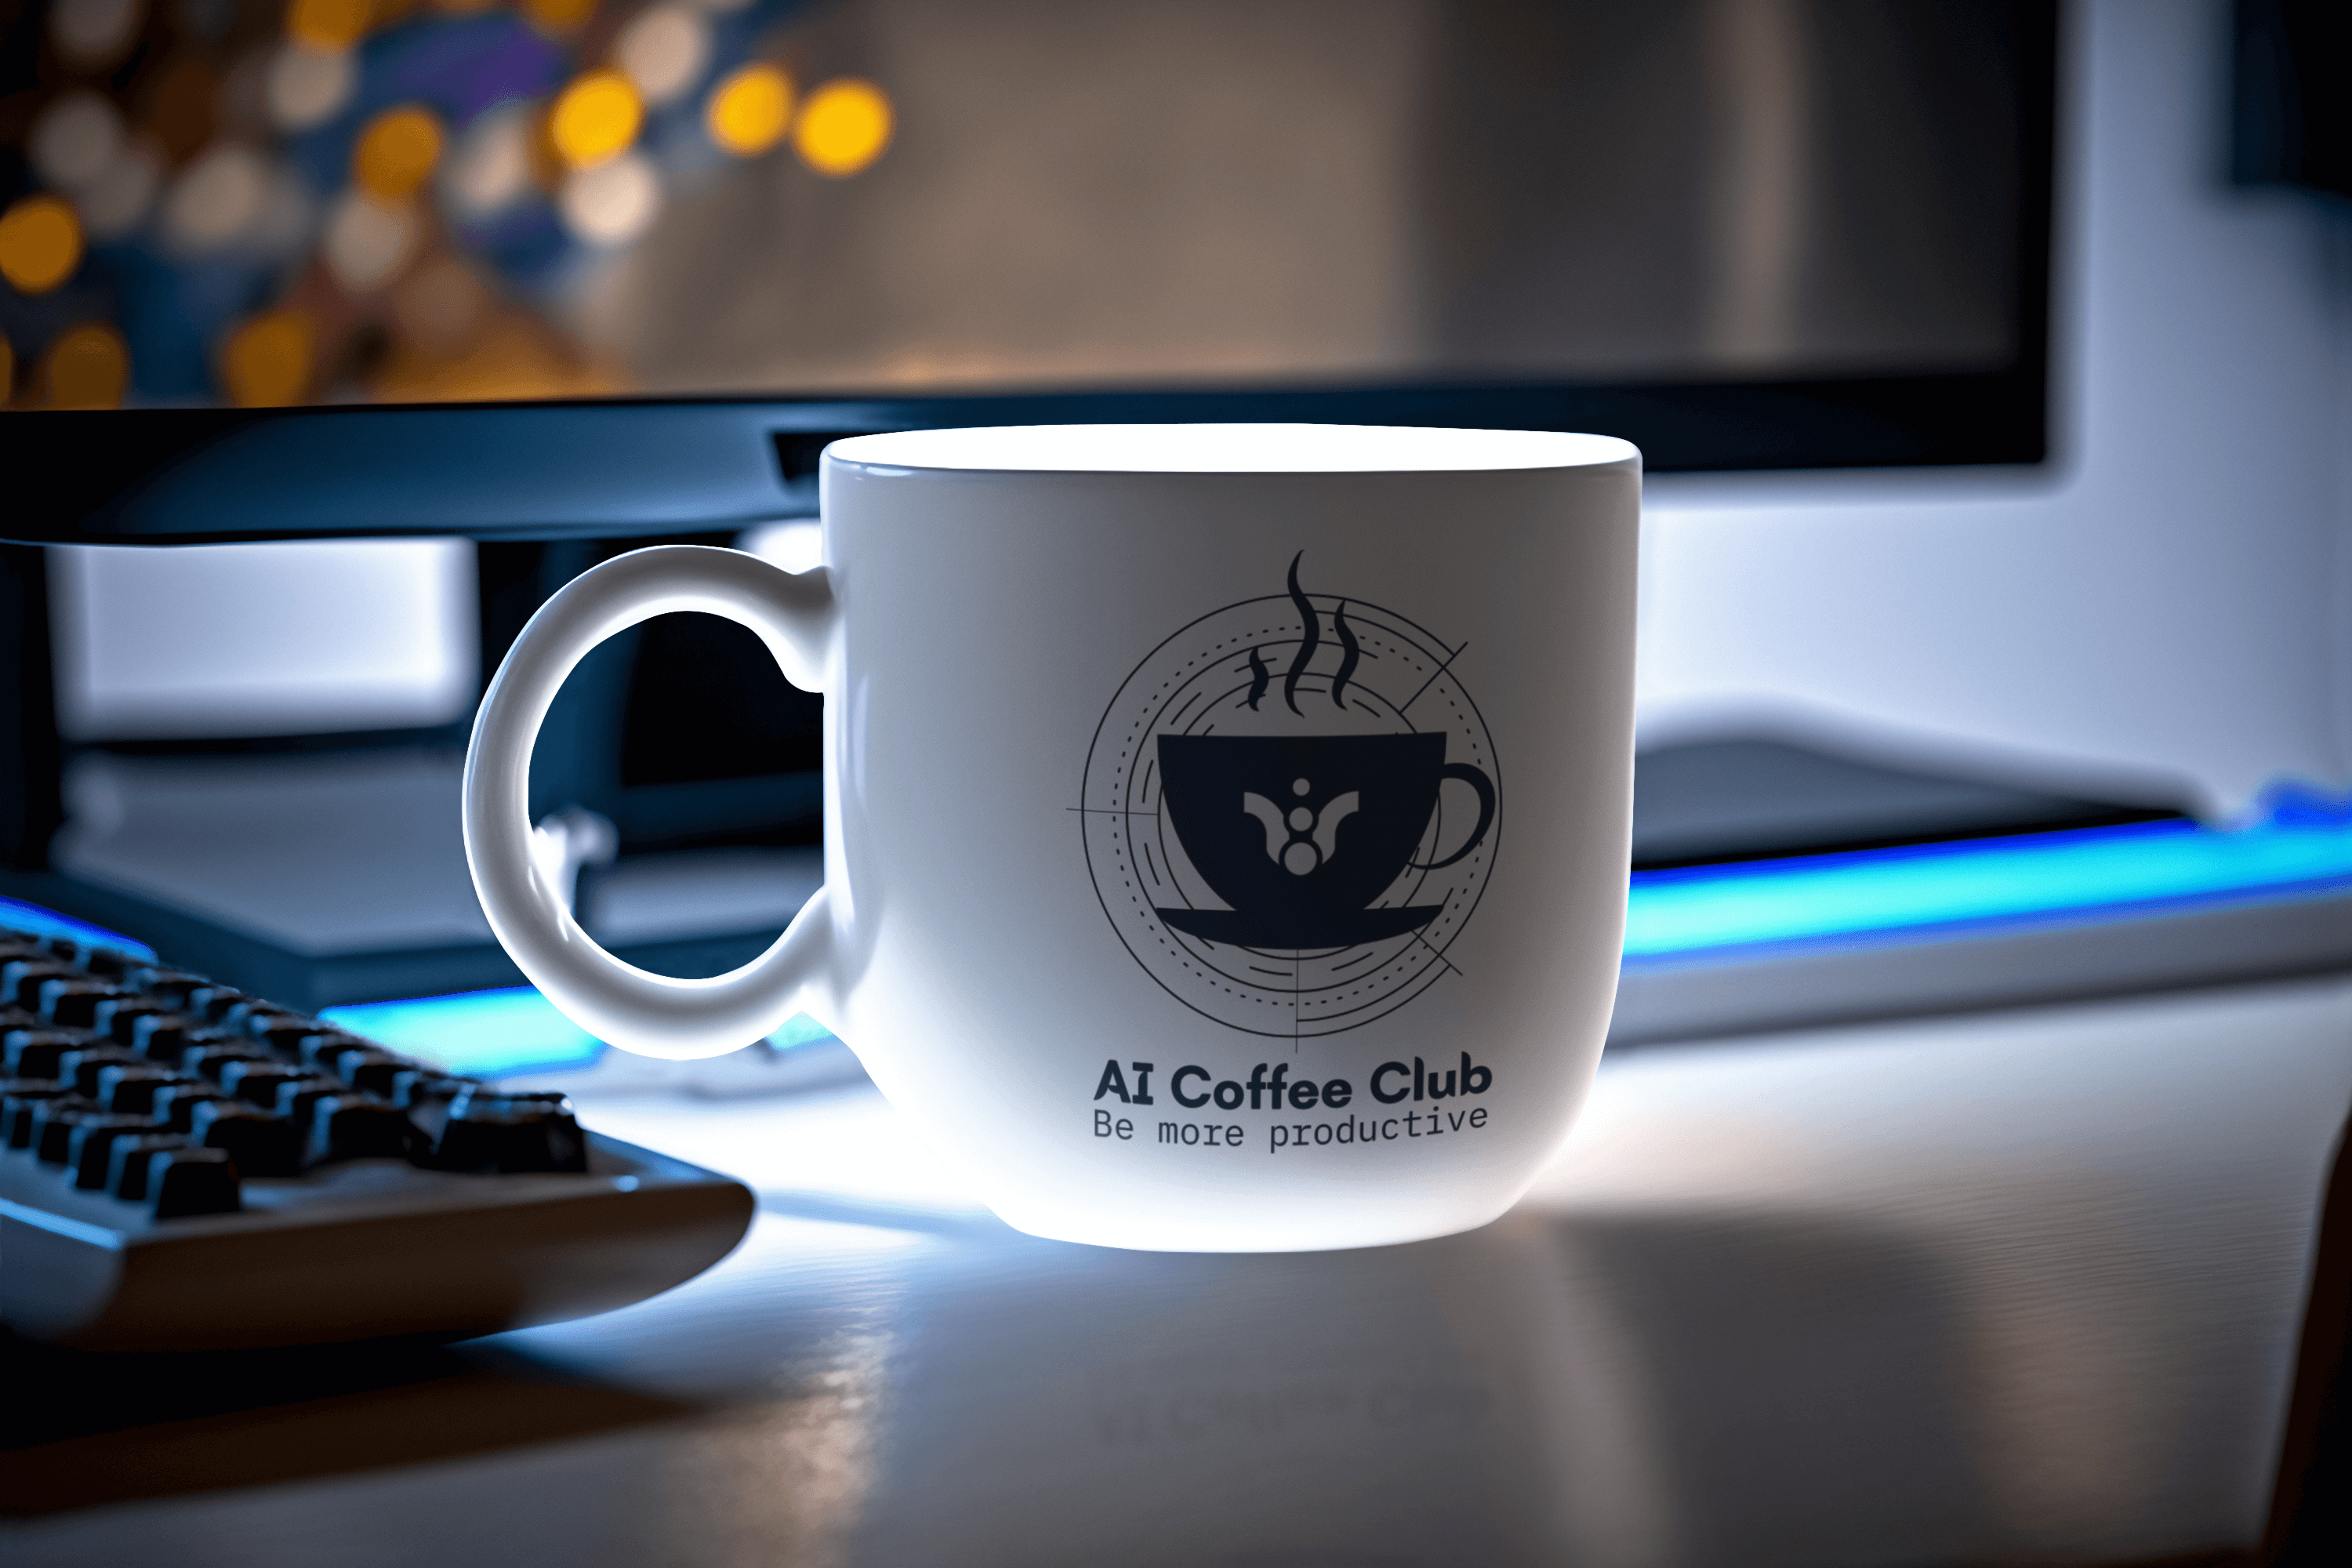 What is AI Coffee Club